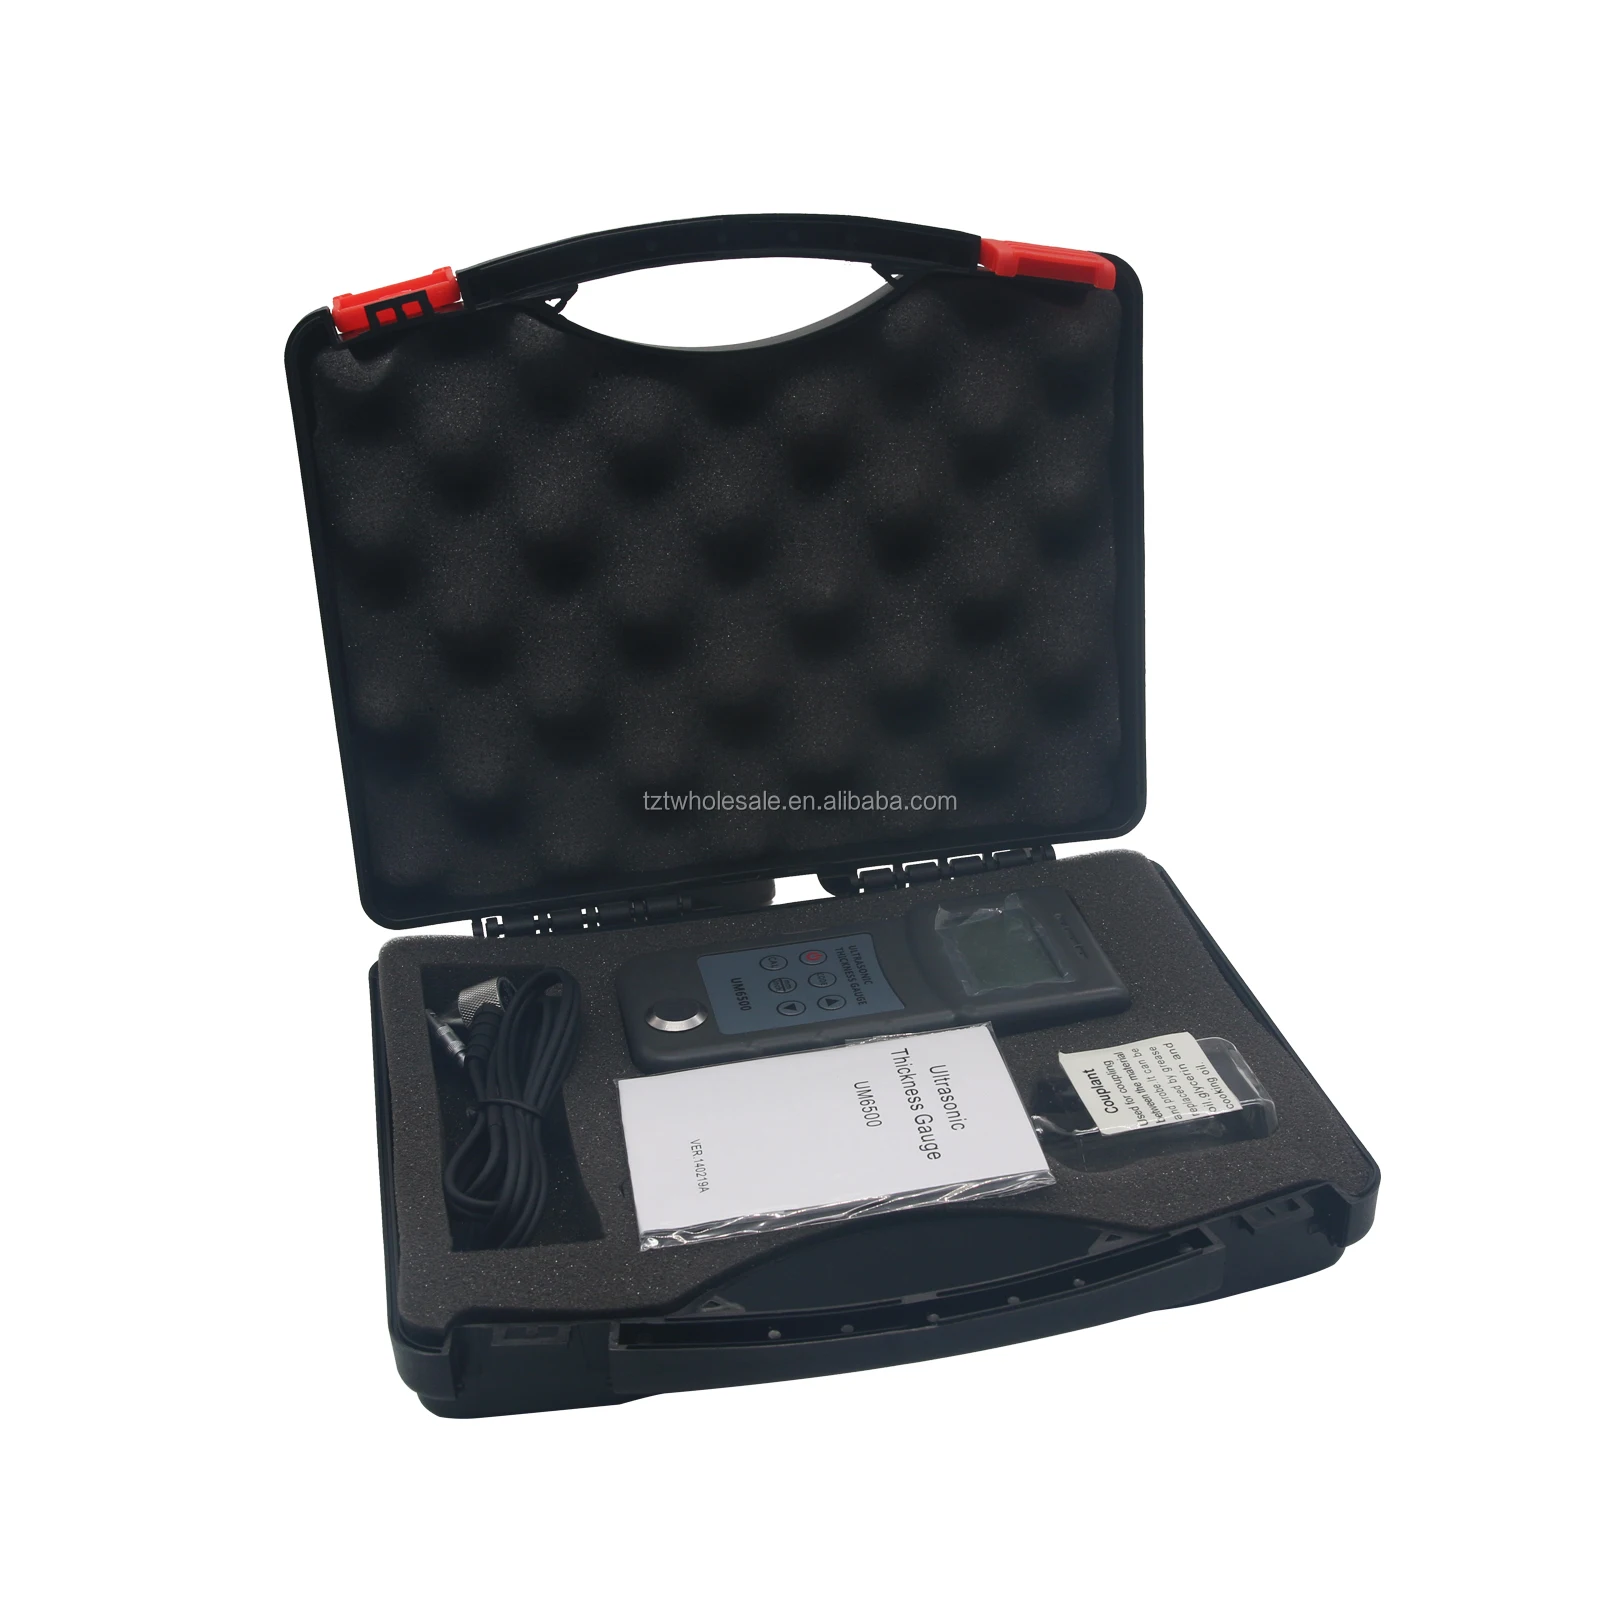 UM6500 Portable Handheld Digital Ultrasonic Thickness Gauge LCD Tester Meter US* 